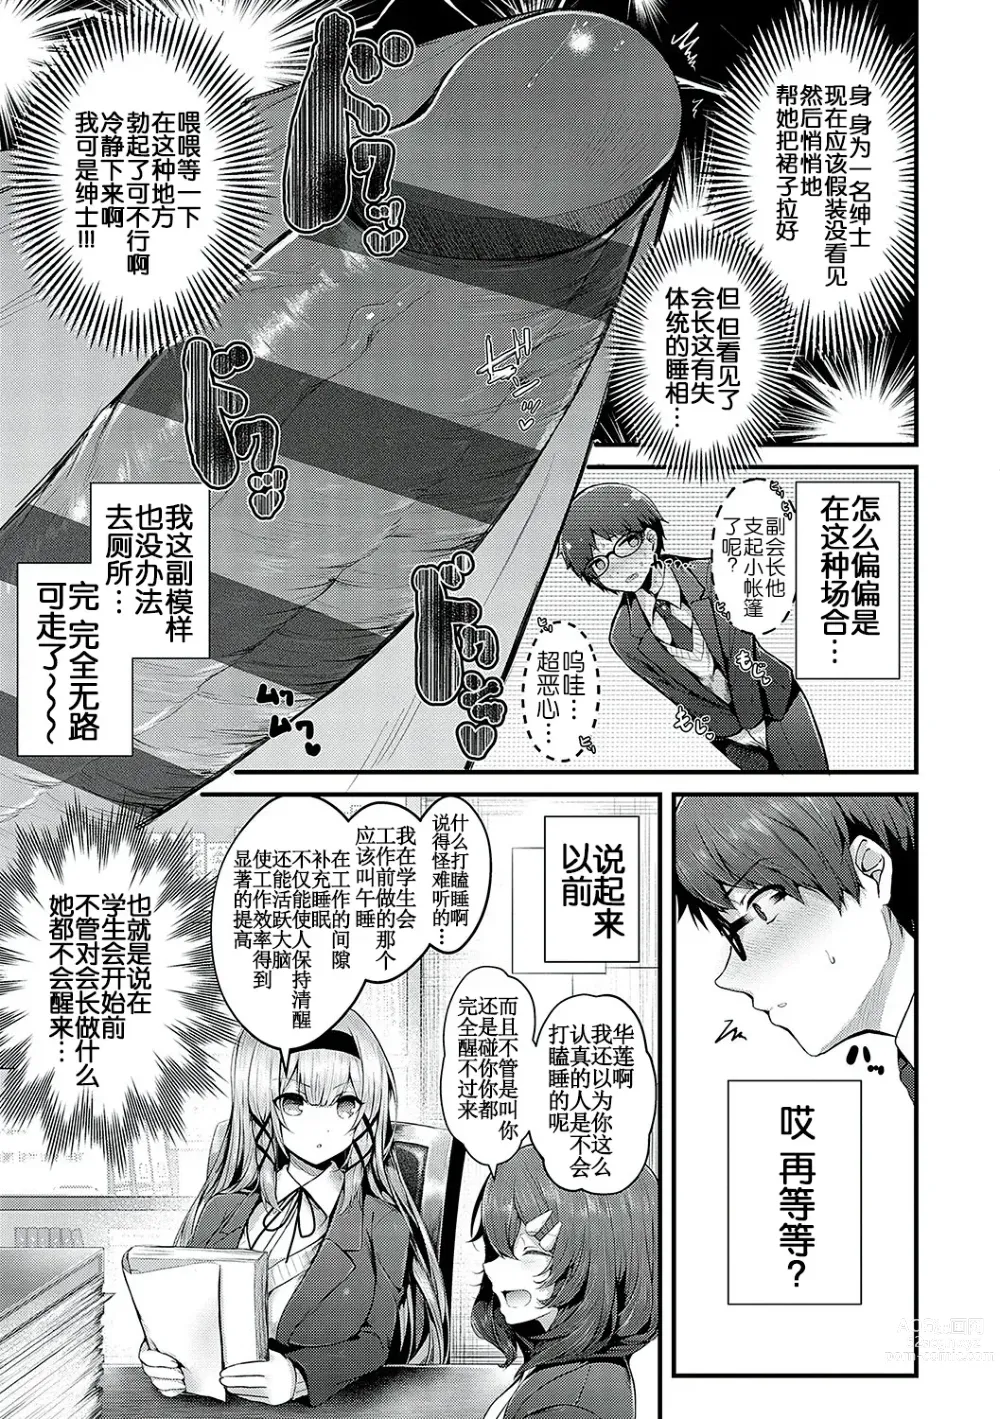 Page 8 of manga Namaiki Love Hole